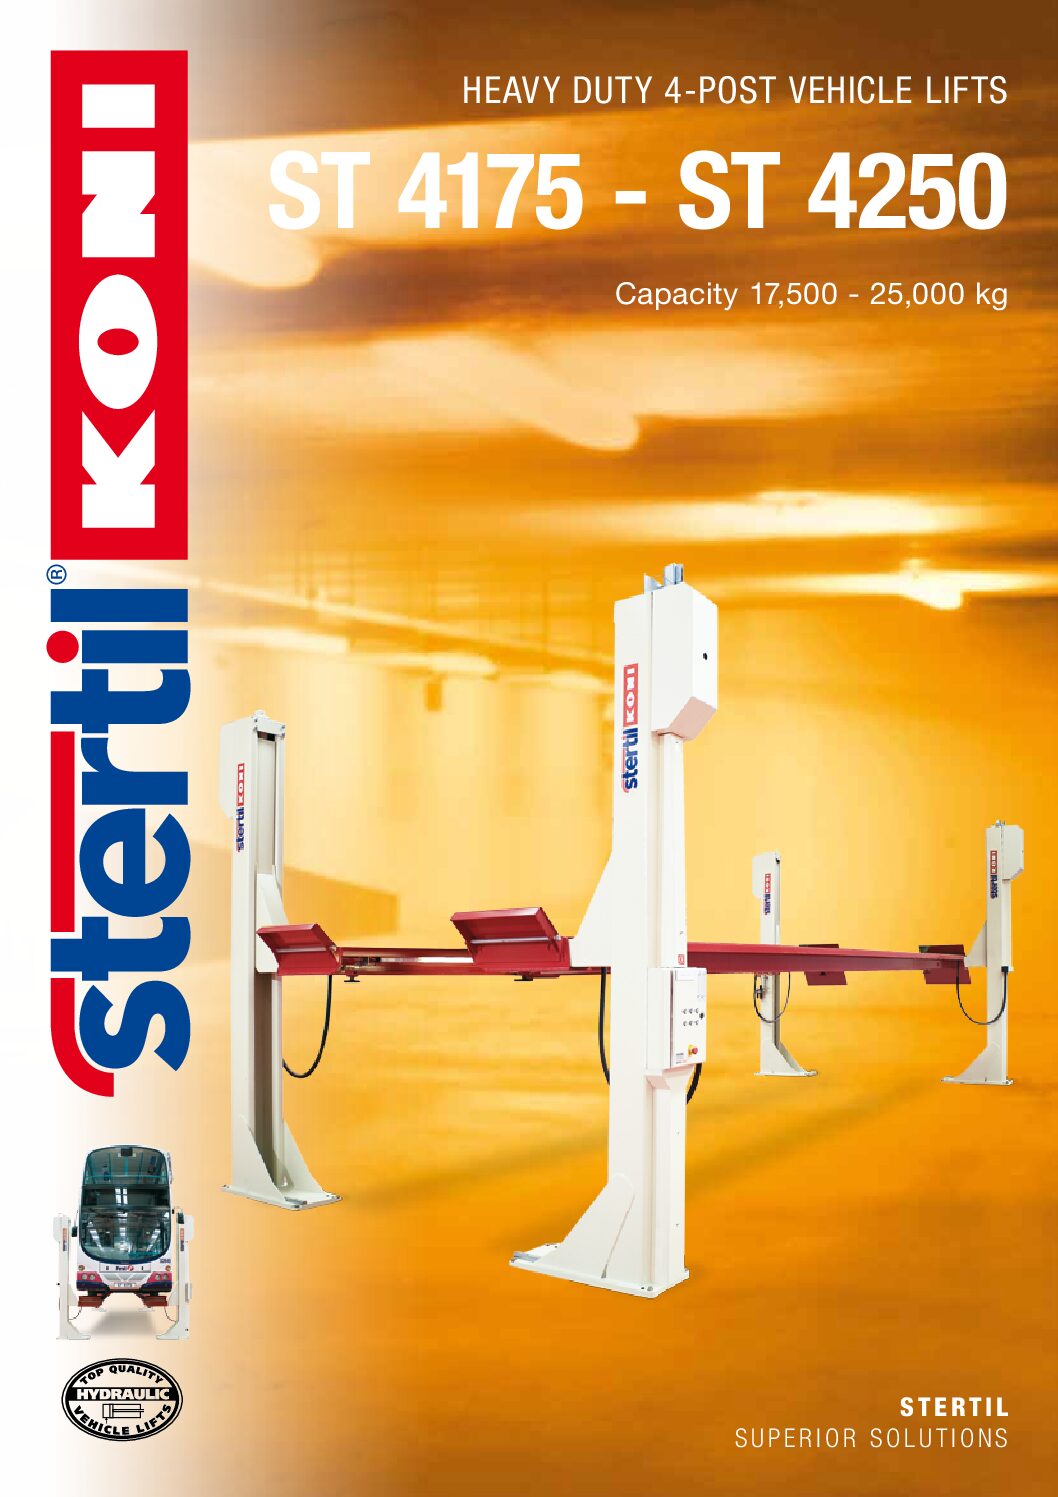 Stertil-Koni: ST 4175 and ST 4250 – GB Version